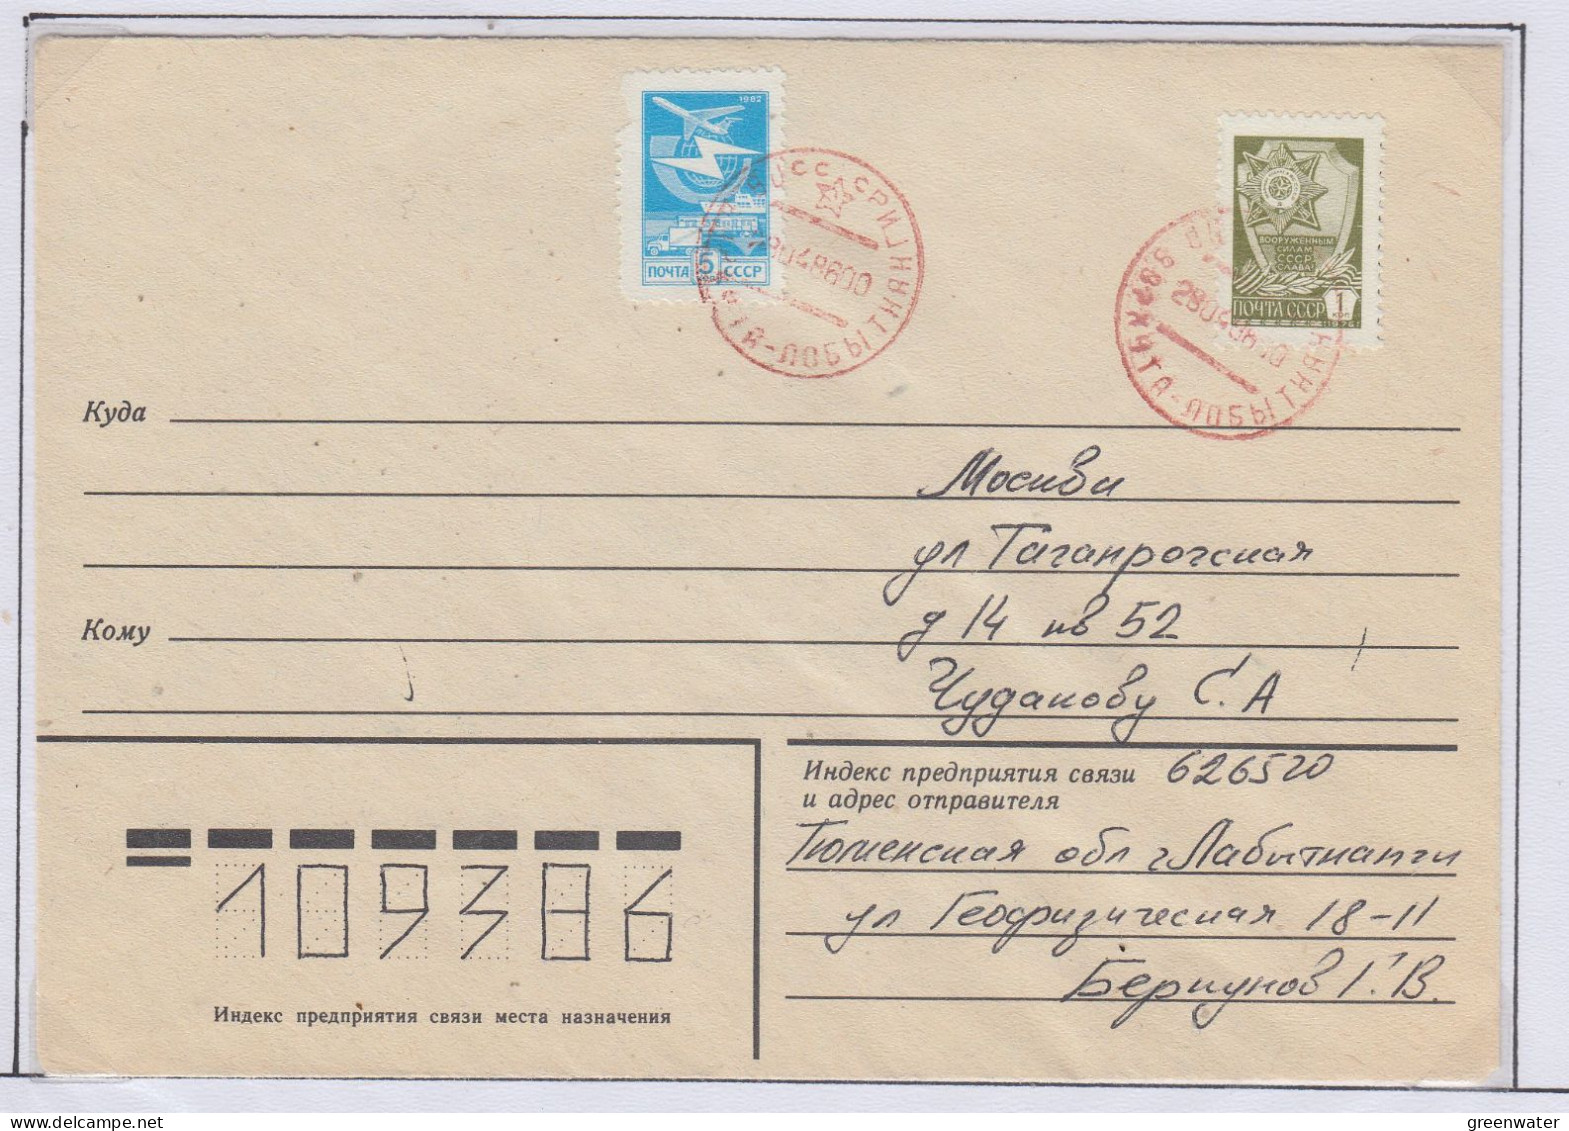 Russia Im Postwaggon Rote Abst. Workuta-Lobitnangi-Kirov Ca 28.04.1986 (PW150A) - Forschungsstationen & Arctic Driftstationen